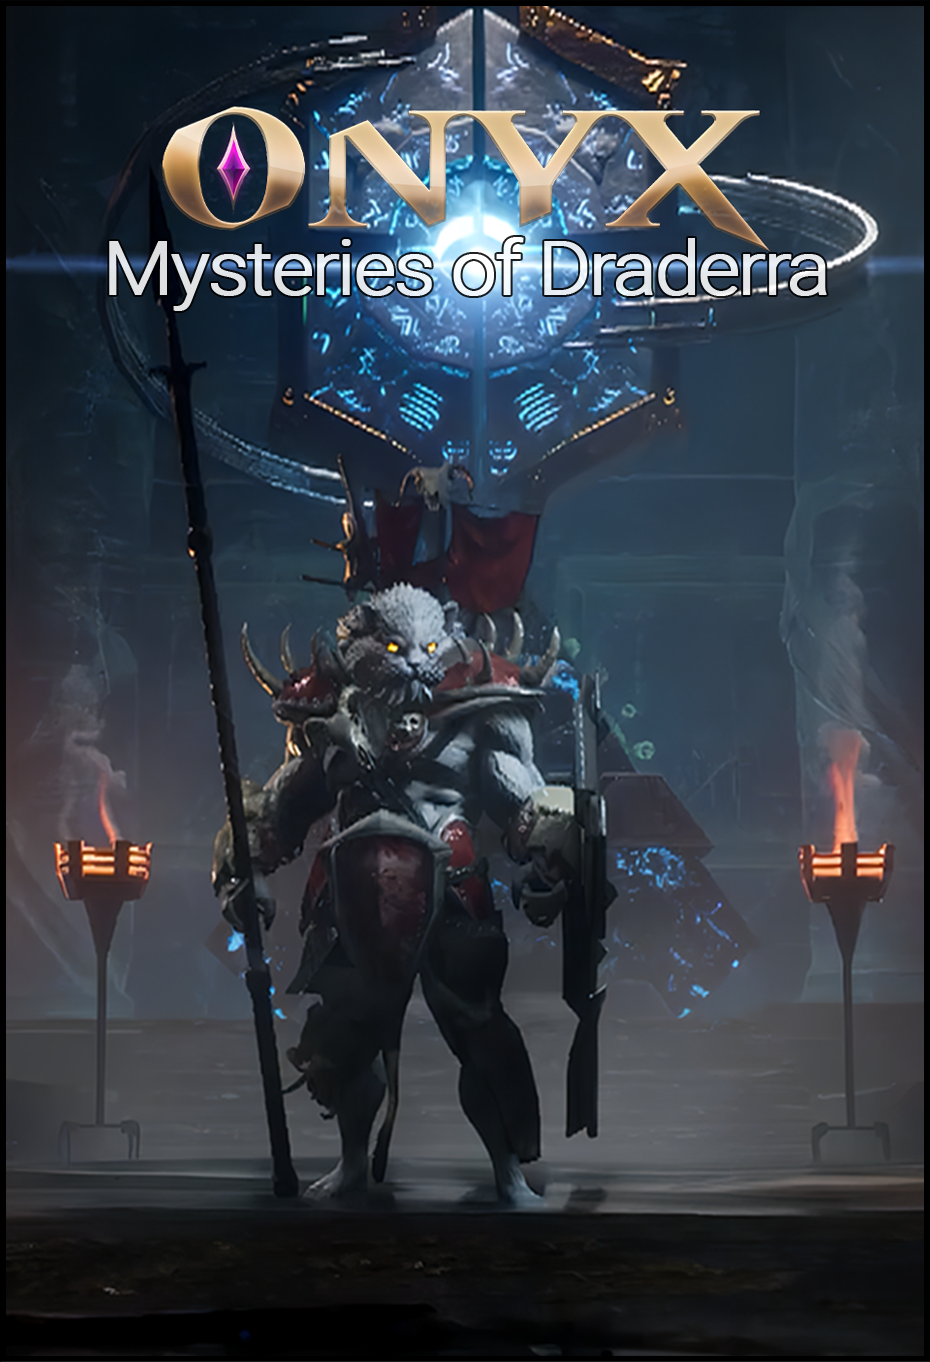 Onyx - Mysteries of Draderra